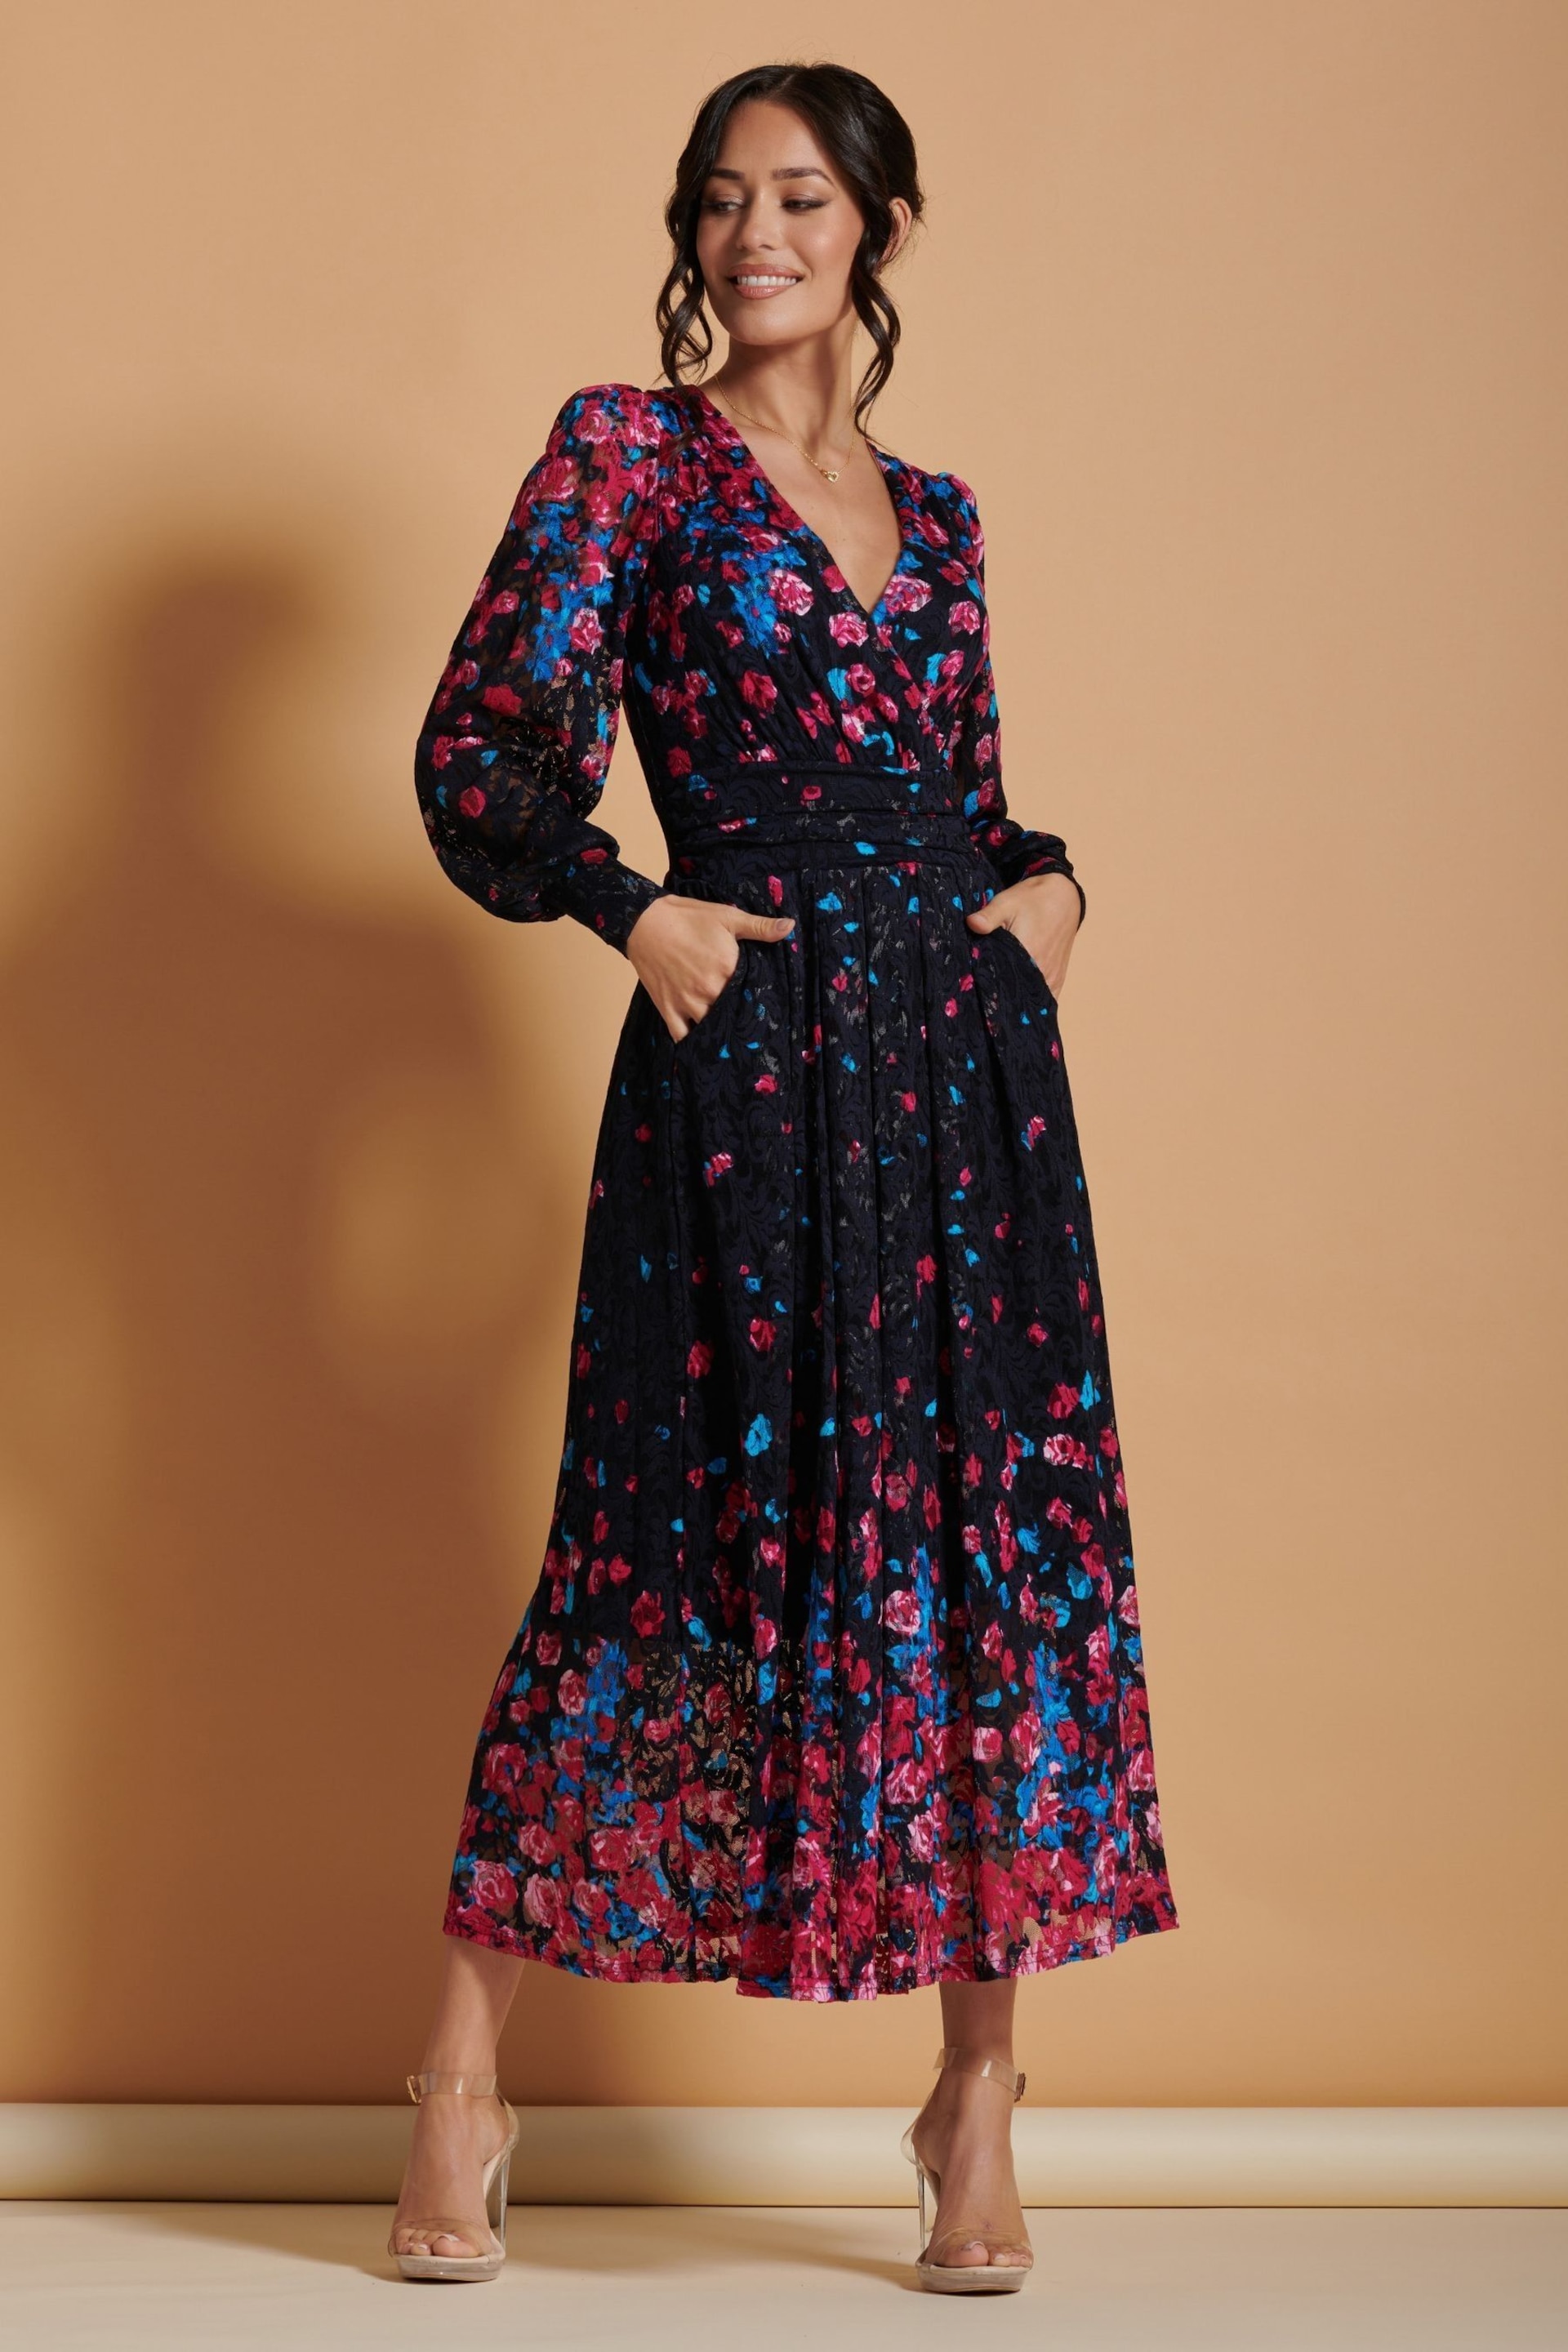 Jolie Moi Black & Pink Symmetrical Print Amica Lace Maxi Dress - Image 6 of 6